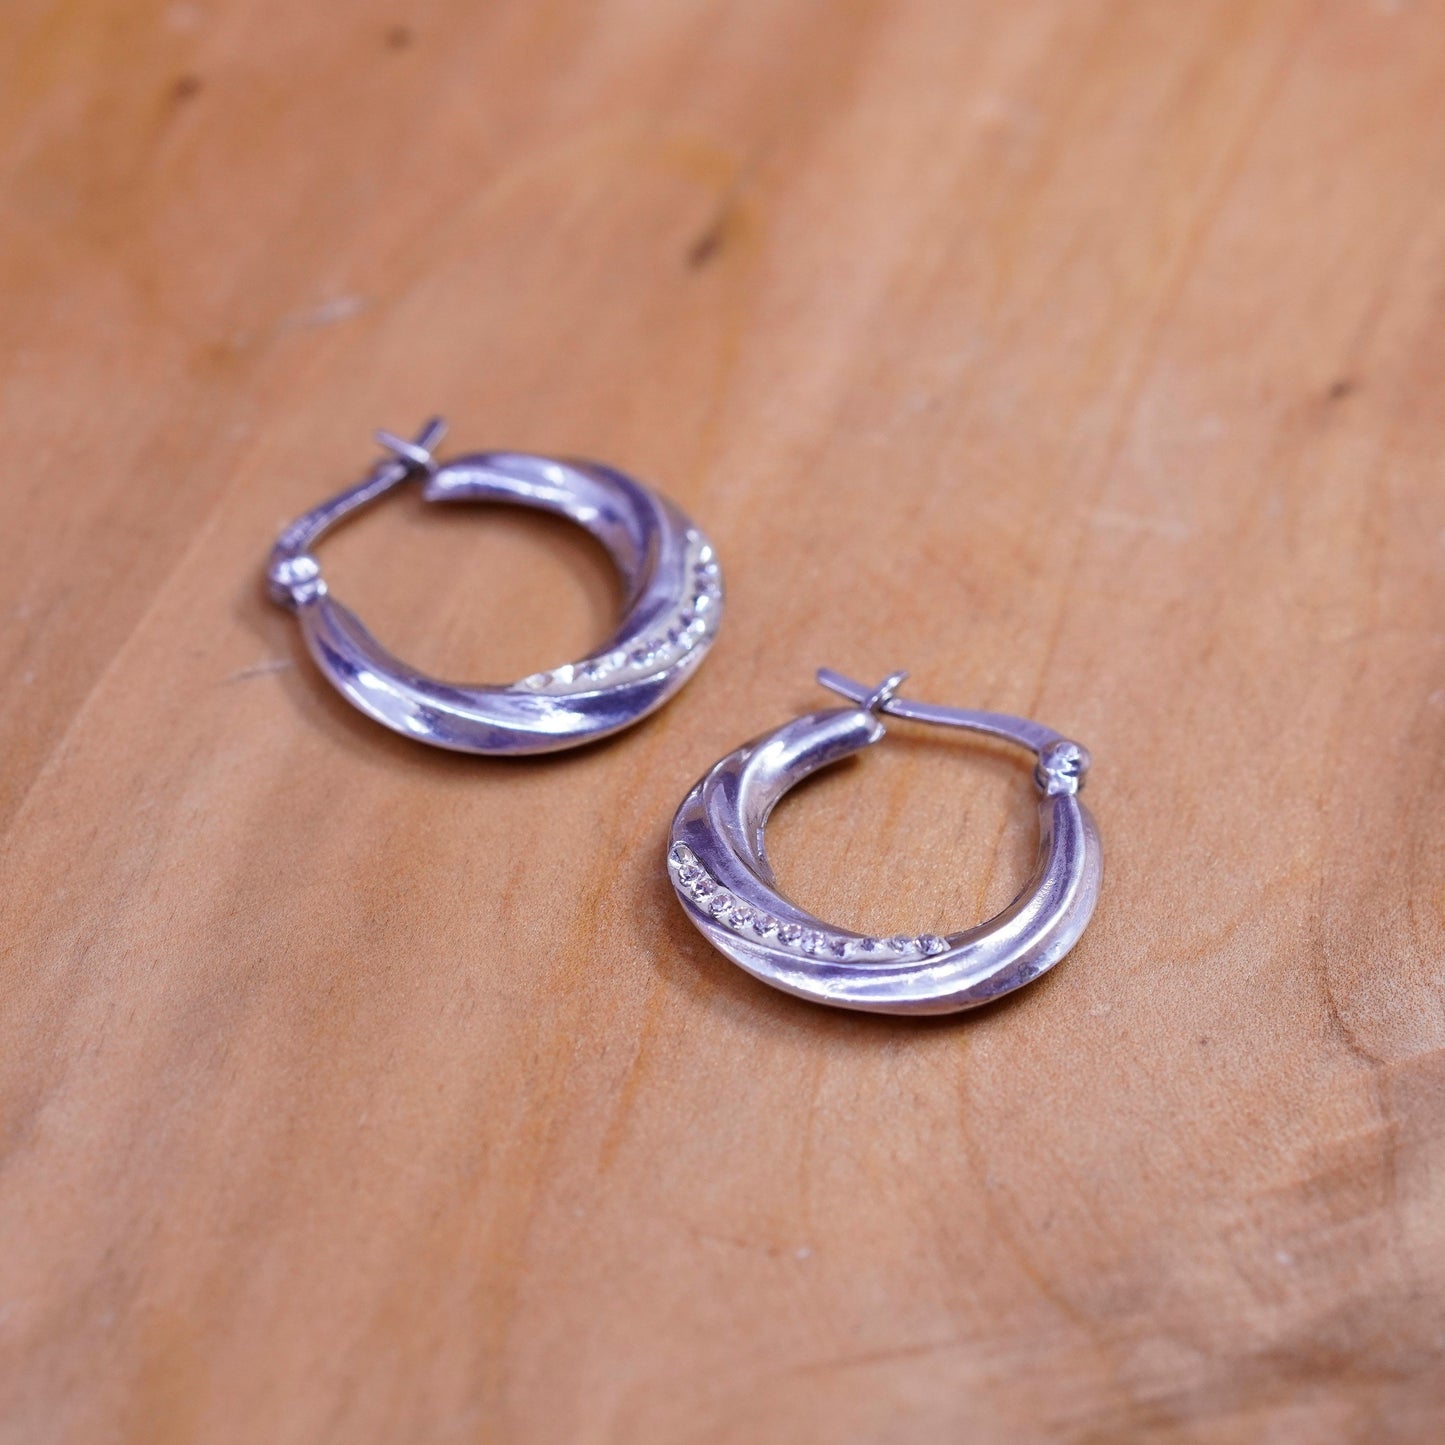 0.75”, Vintage Sterling silver handmade earrings, ribbed 925 hoops with cz